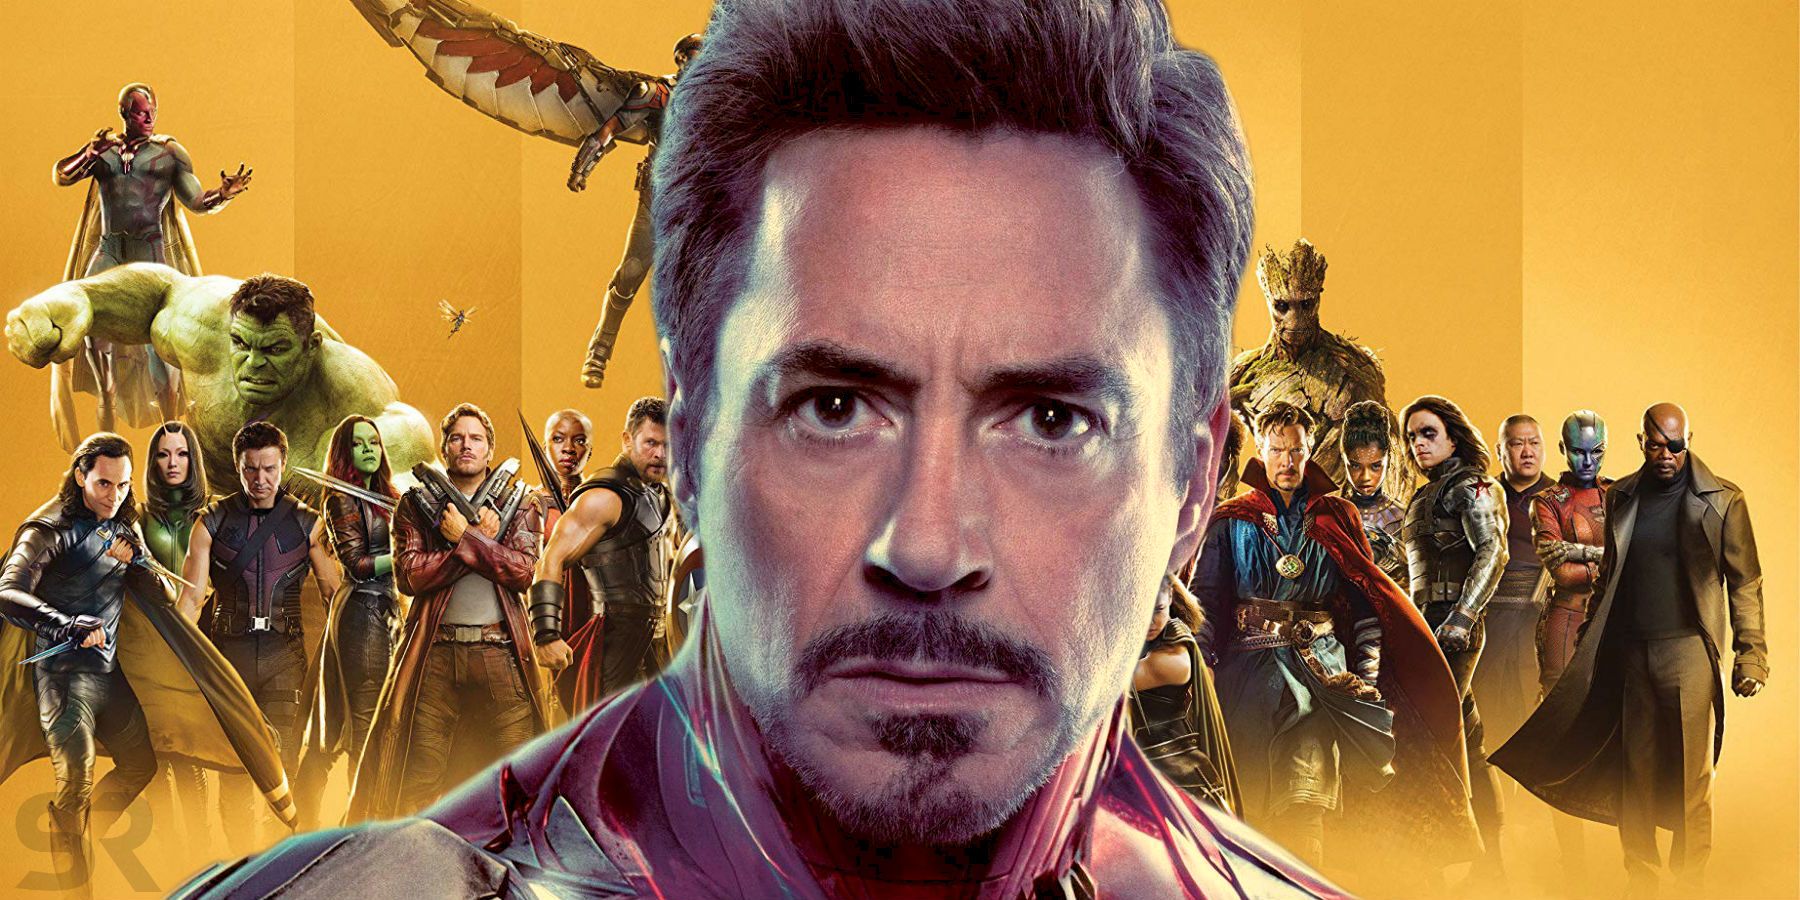 Avengers Cast Wish Iron Man A Happy Birthday From Endgame Set